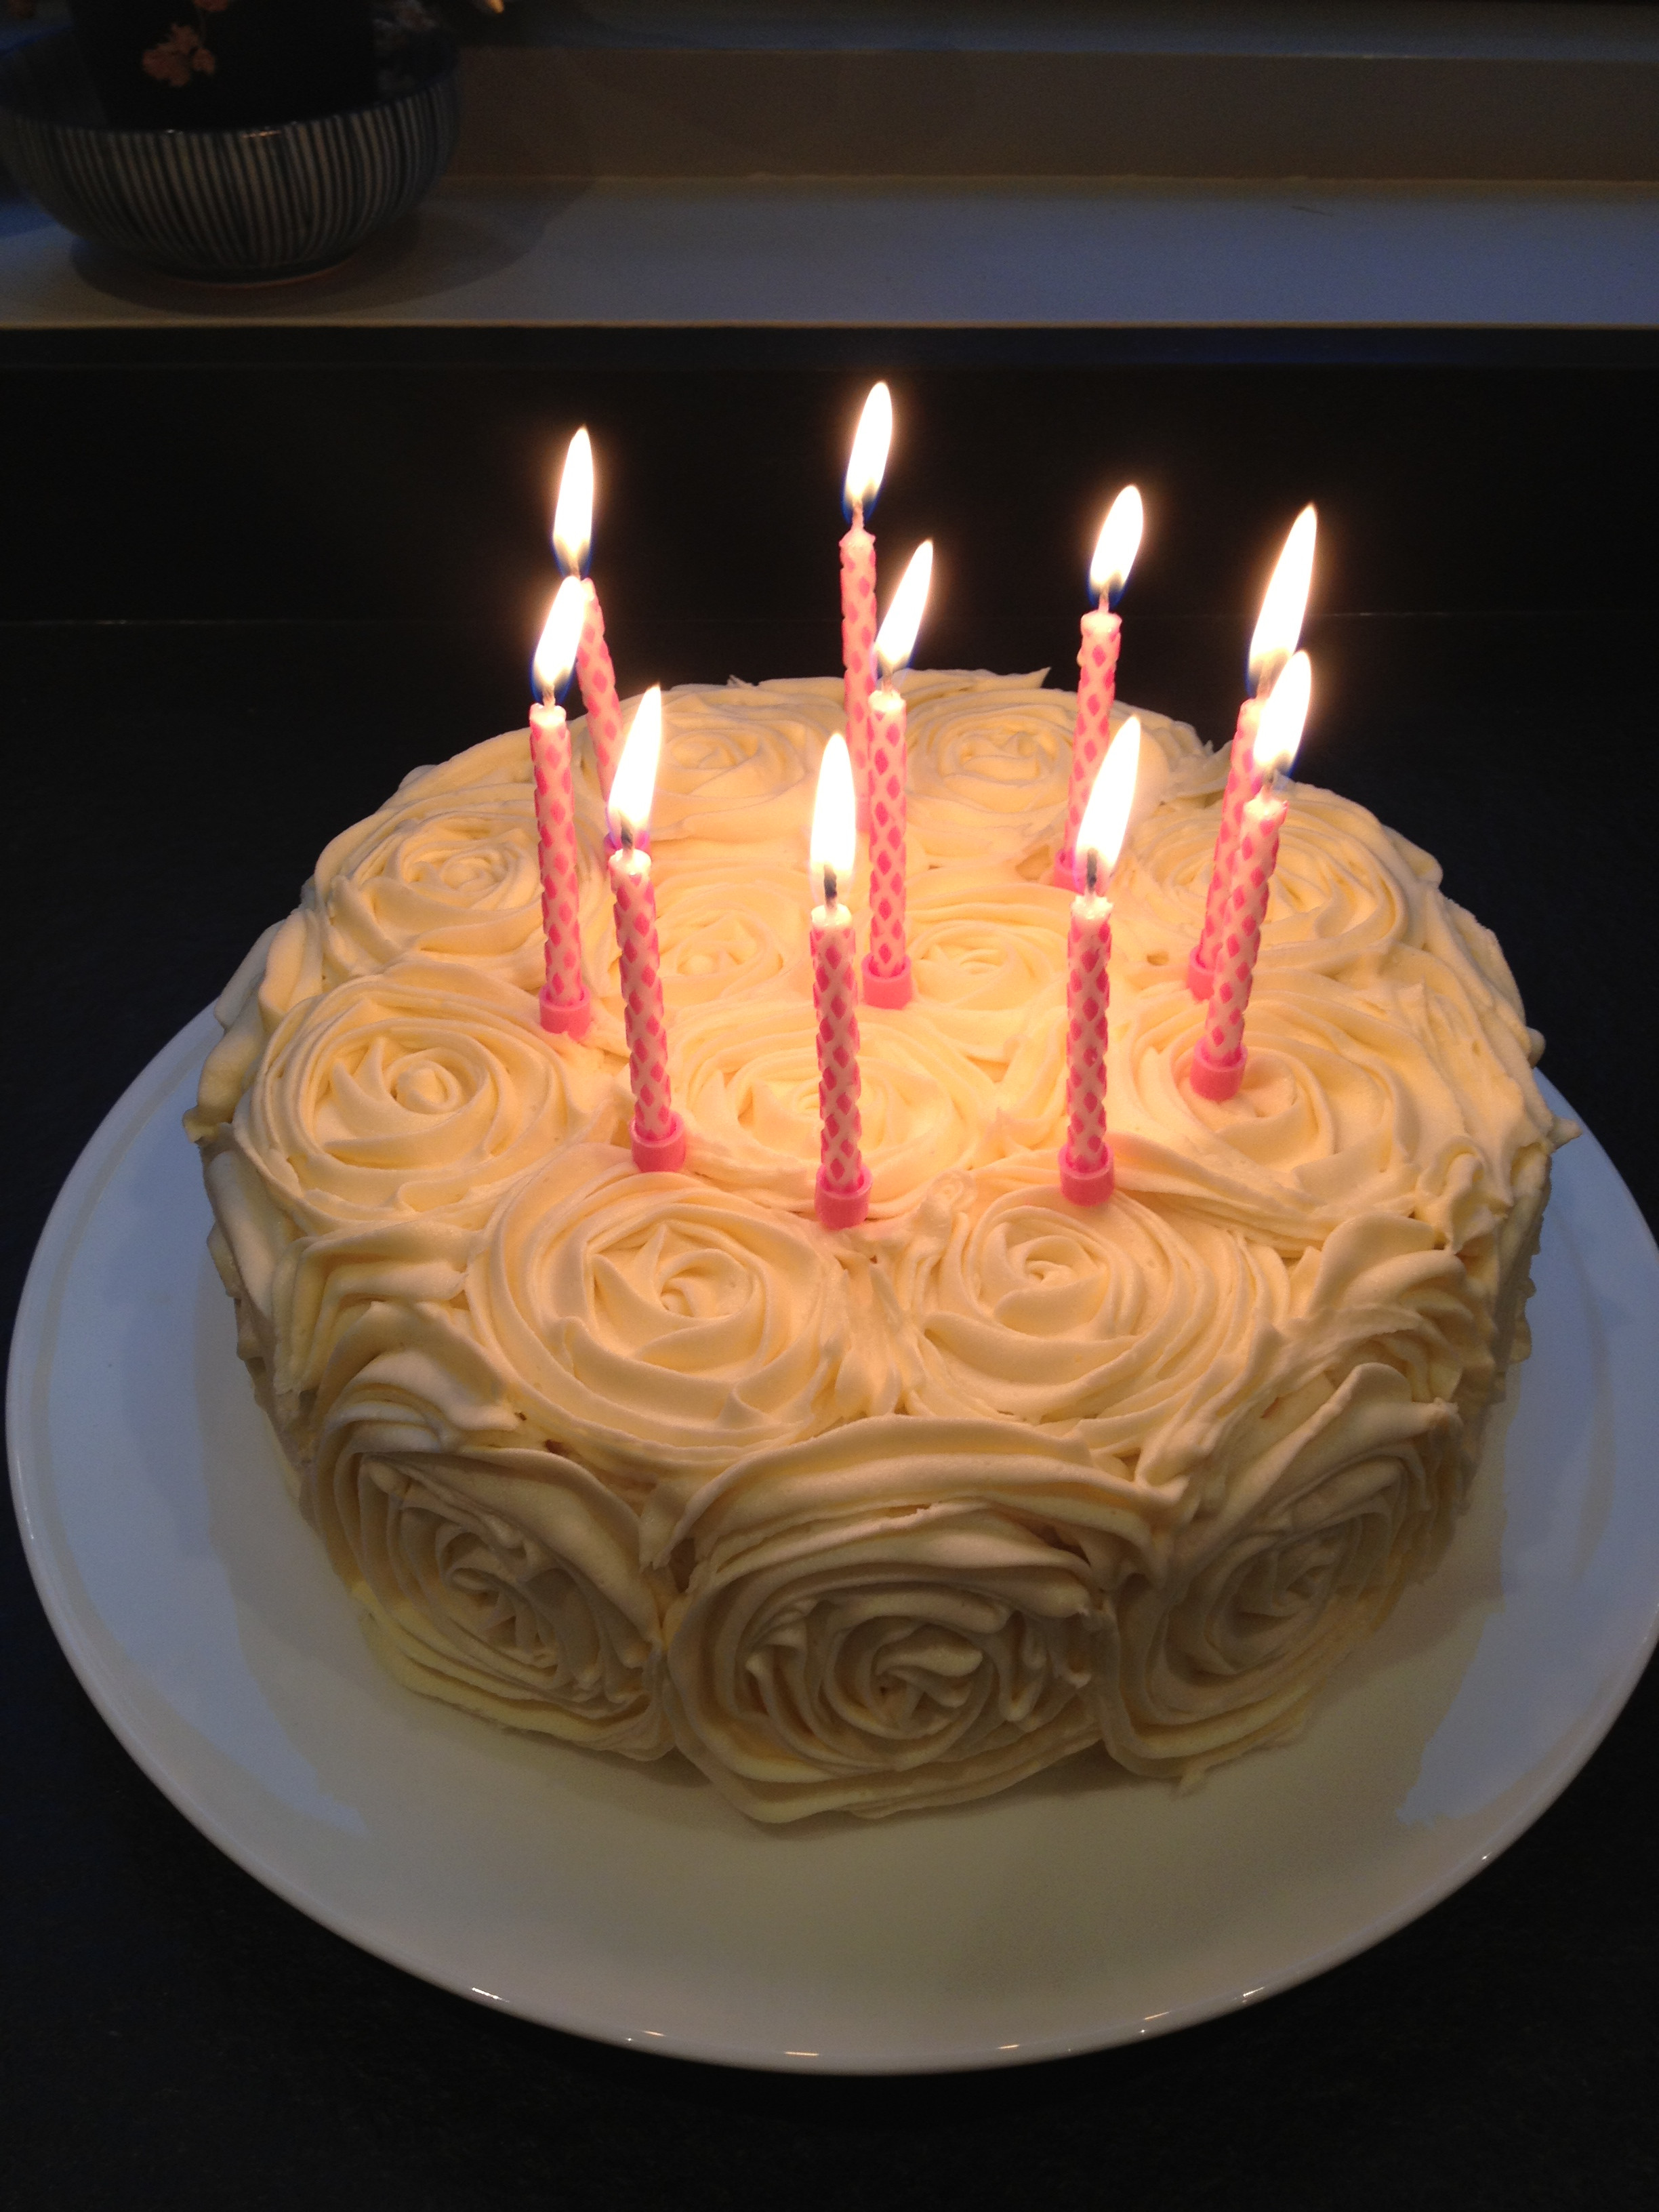 Best ideas about Beautiful Birthday Cake Image
. Save or Pin A Most Beautiful Birthday Cake Now.